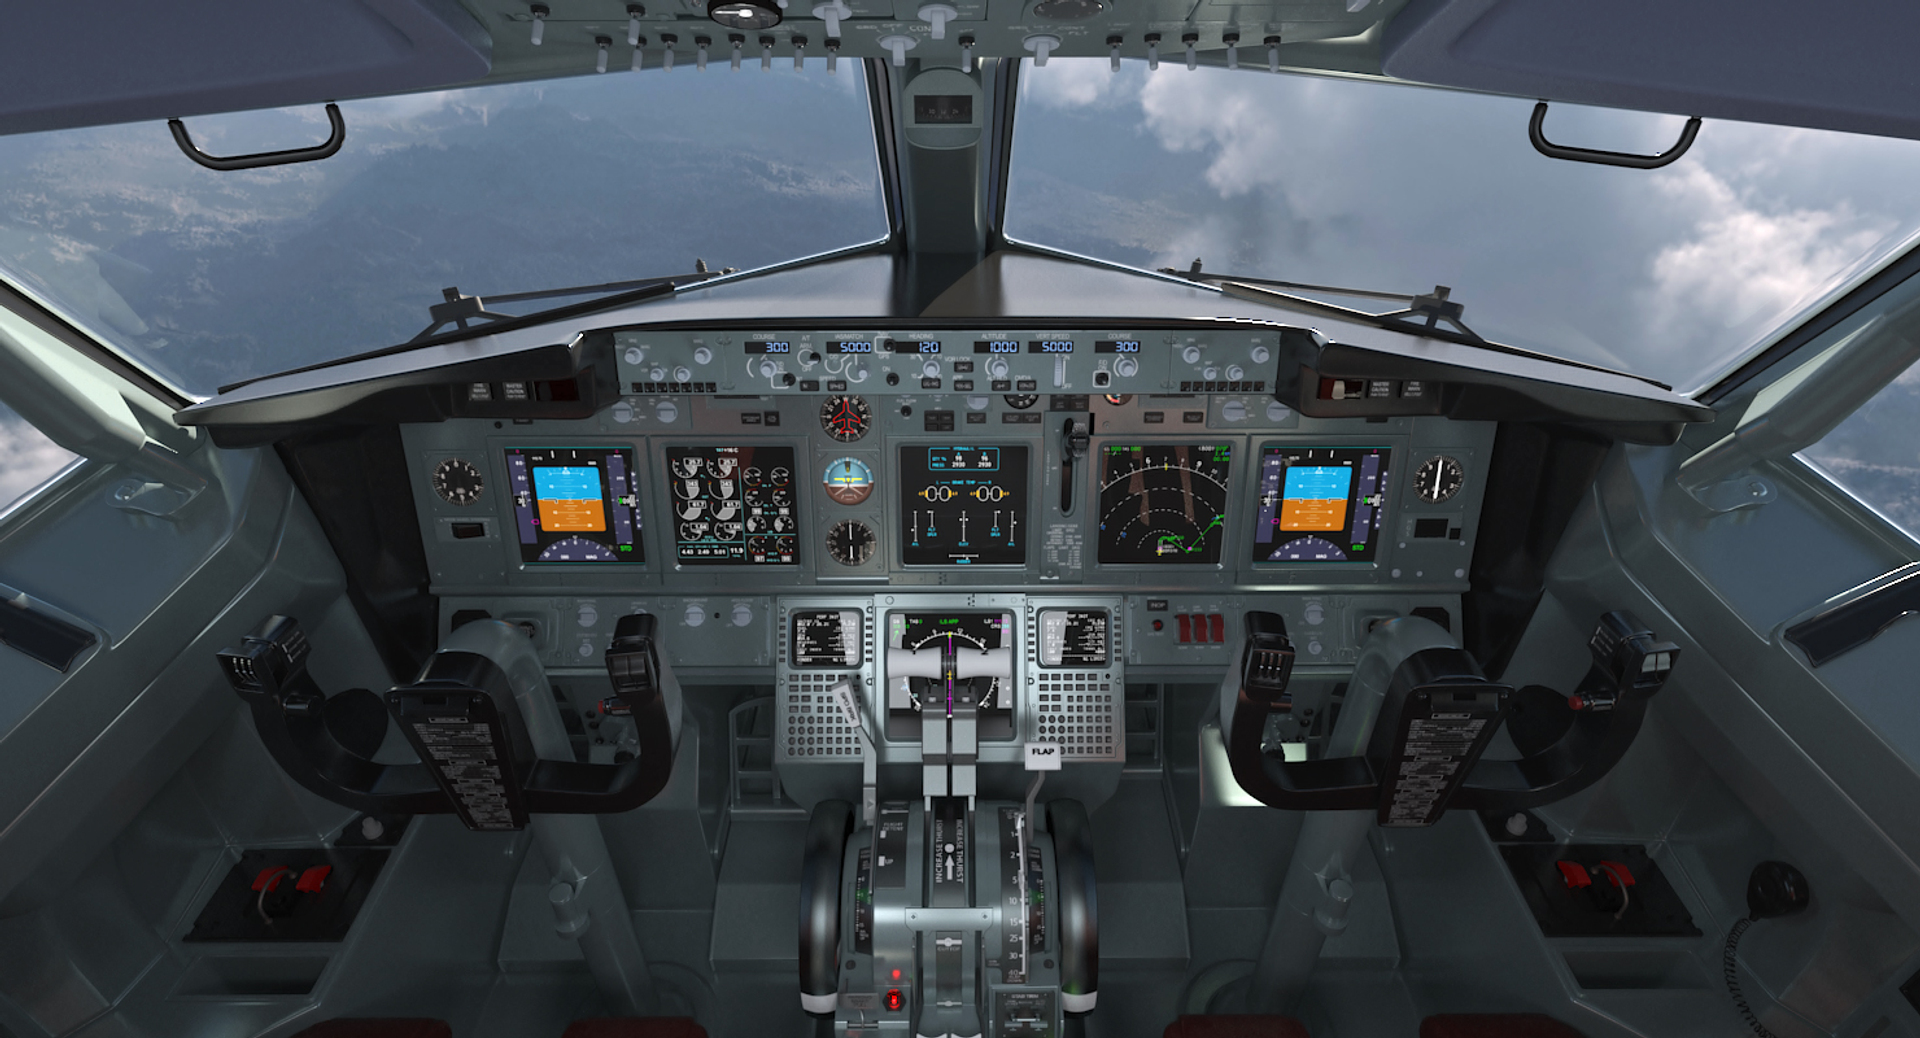 boeing 737 cockpit 3D model https://p.turbosquid.com/ts-thumb/oo/gnpP3P/YG67VRpL/boeing_737_cockpit_360/jpg/1501613235/1920x1080/turn_fit_q99/ff7a956529fb9f93adefd4940f5da48c7c307d1f/boeing_737_cockpit_360-1.jpg